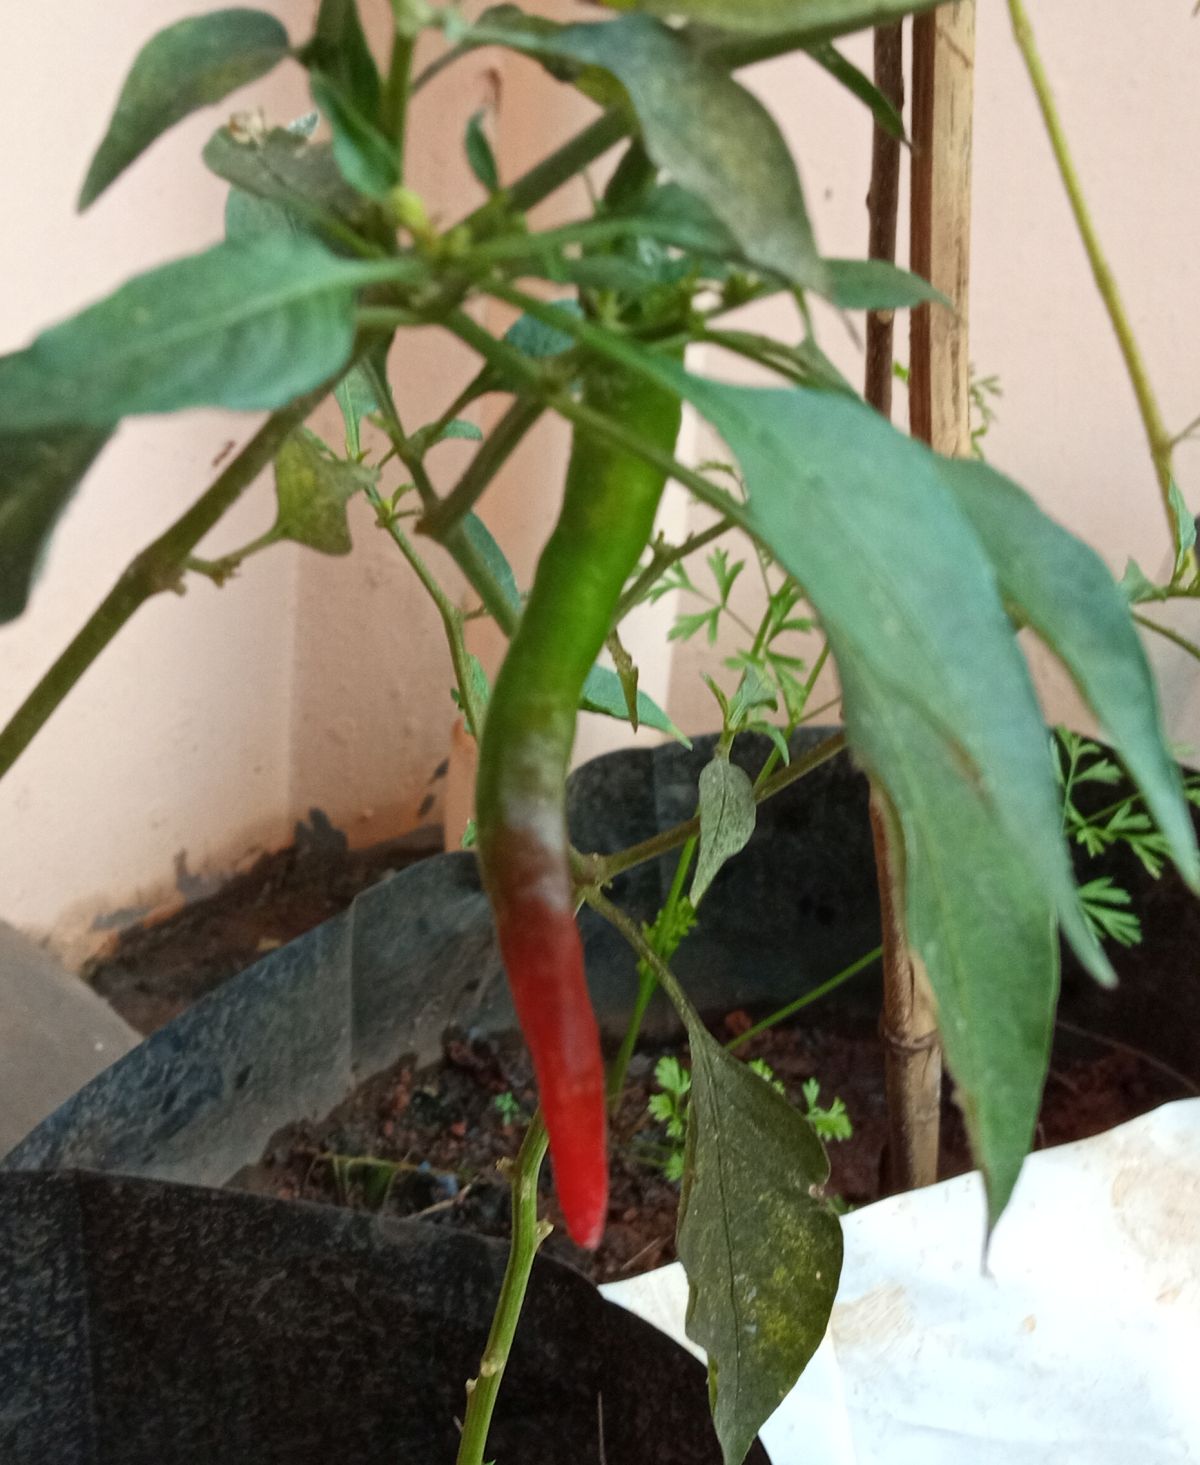 Chili fruit ripening